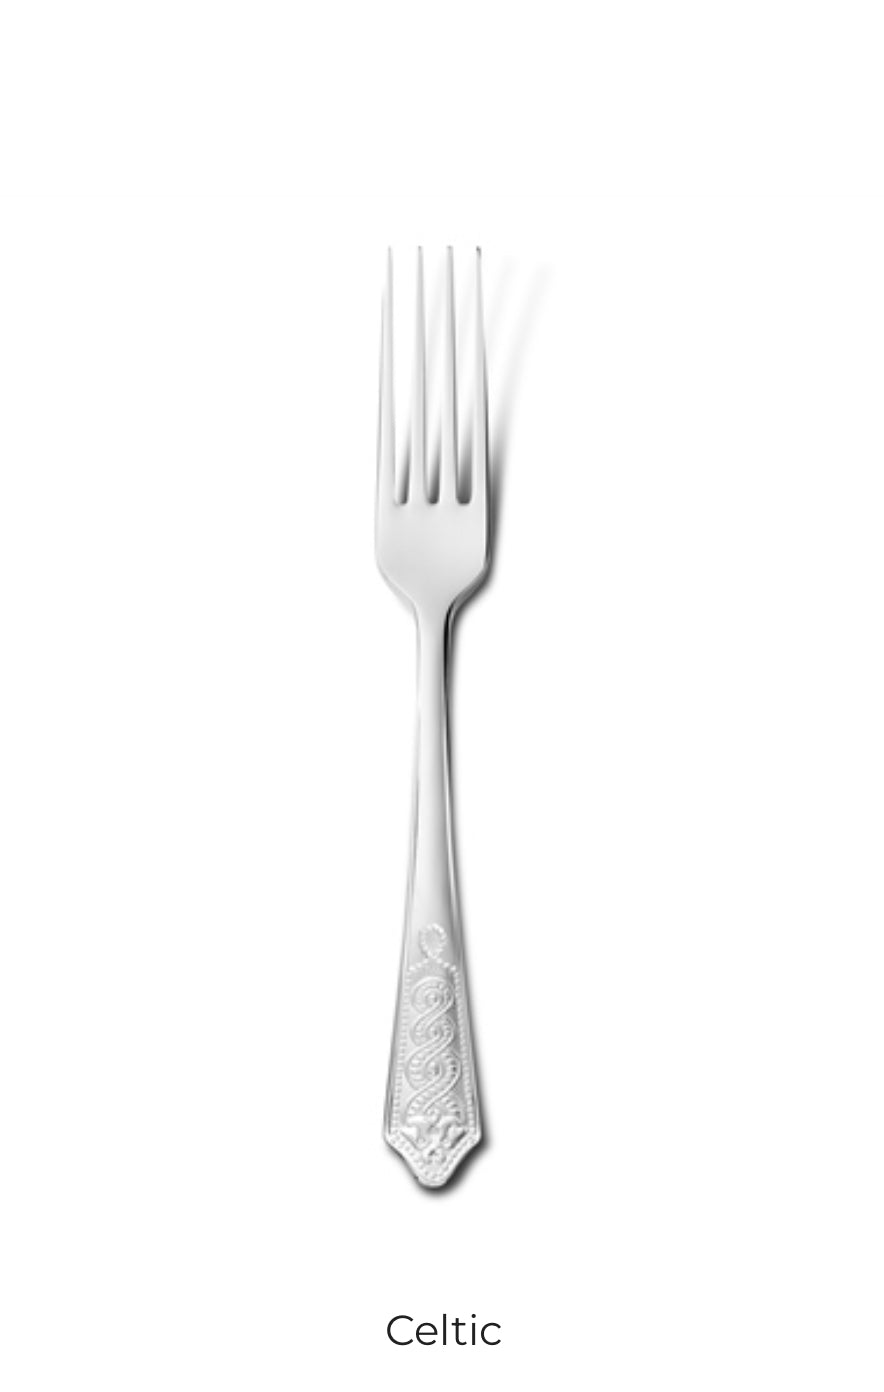 Newbridge Silverware Celtic Stainless Steel Cutlery - Table Fork